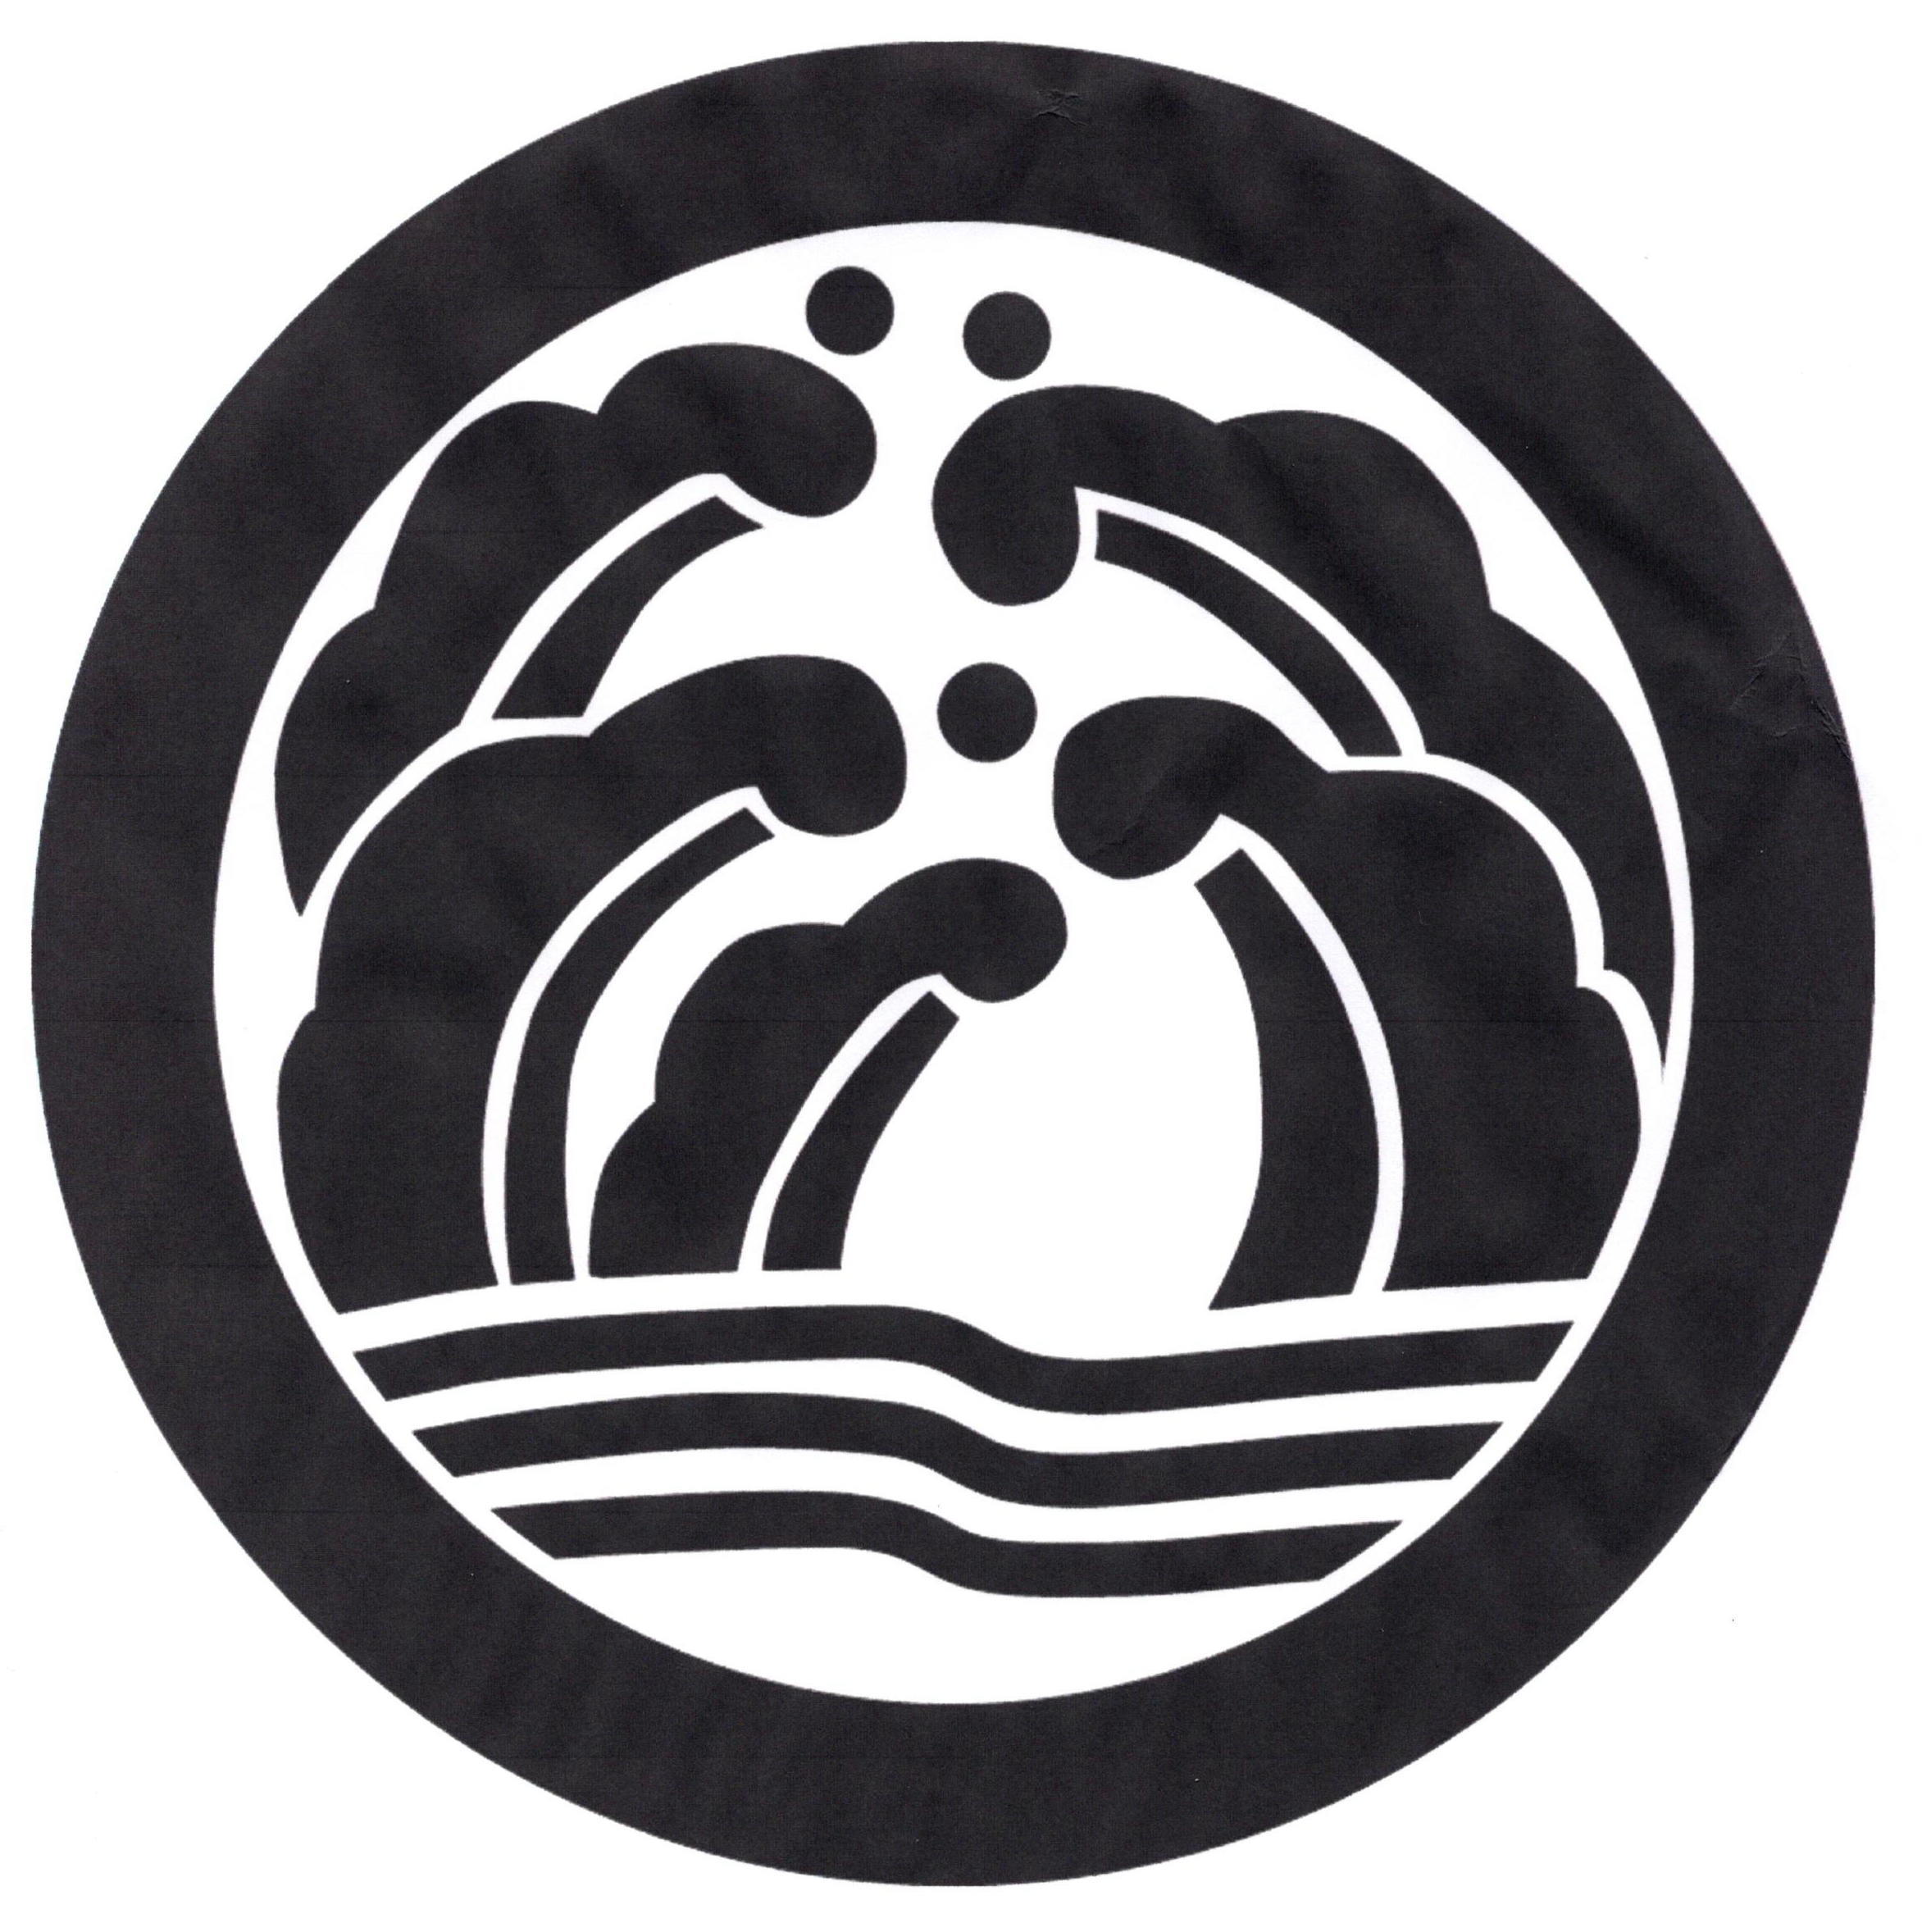 Family crest: Maru-tatsunami or turbulent waves